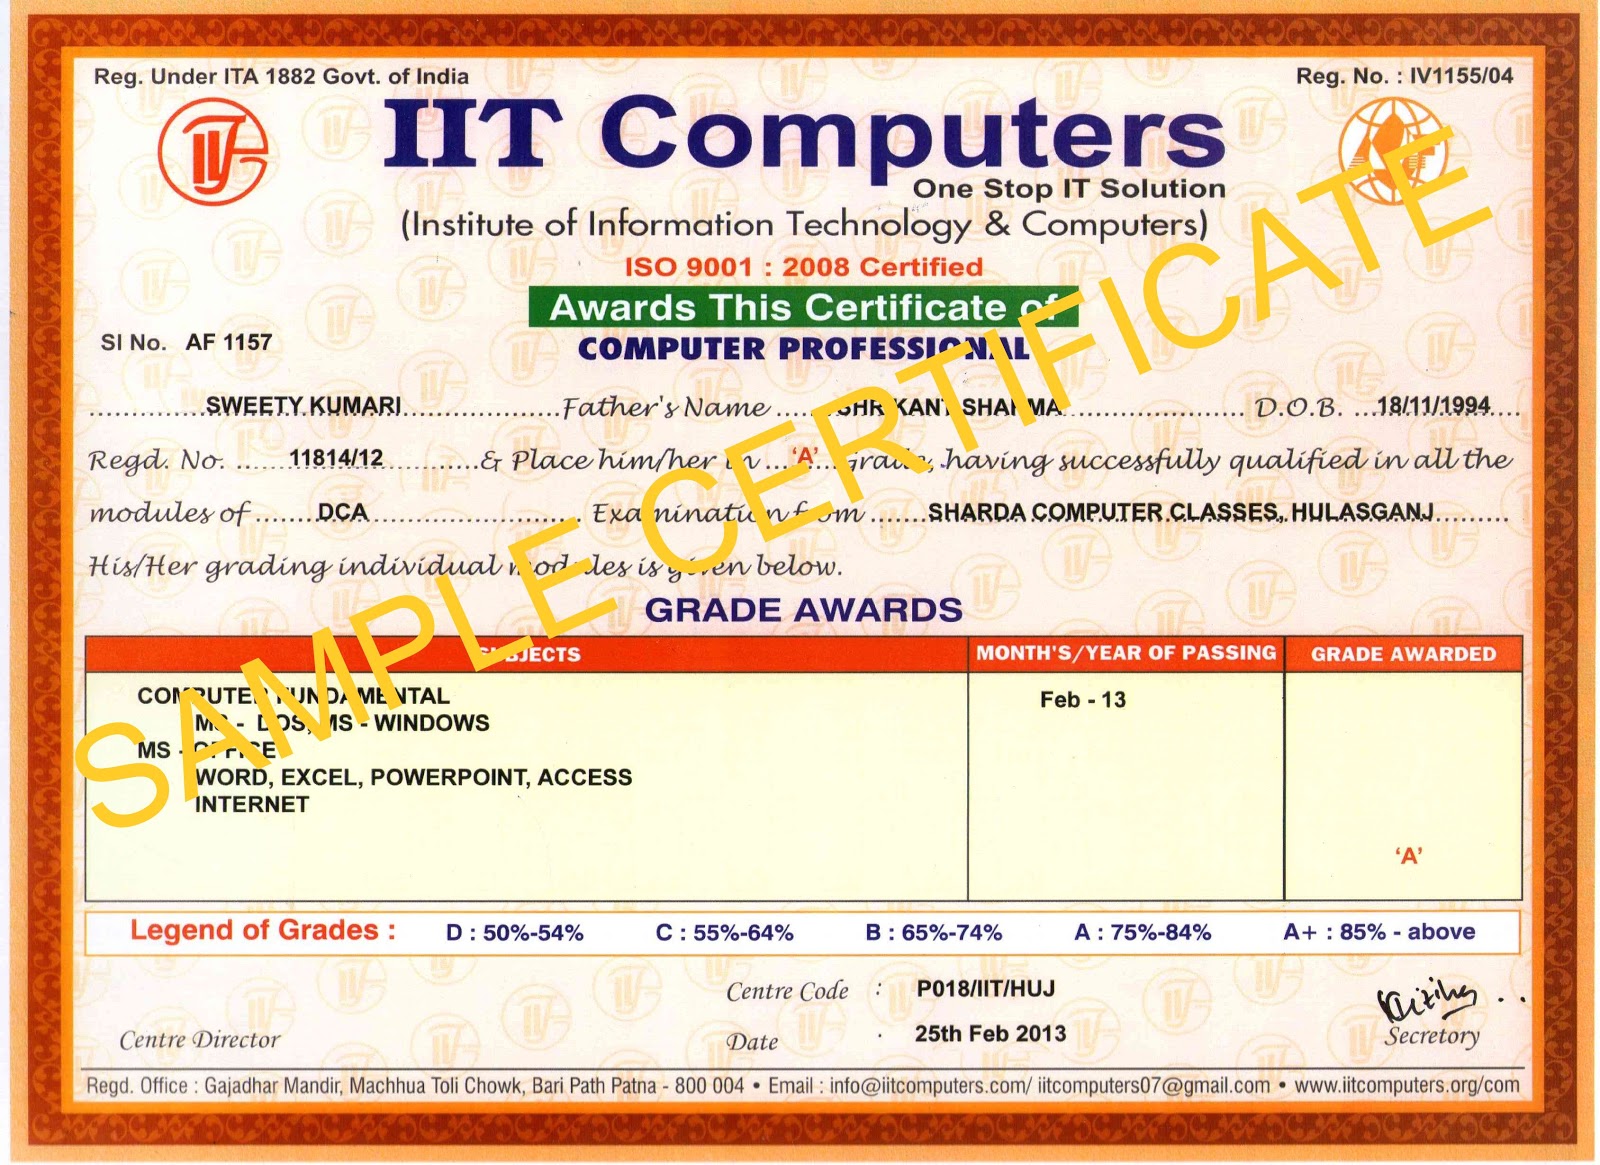 Sharda Computer Classes: Sample Certificate